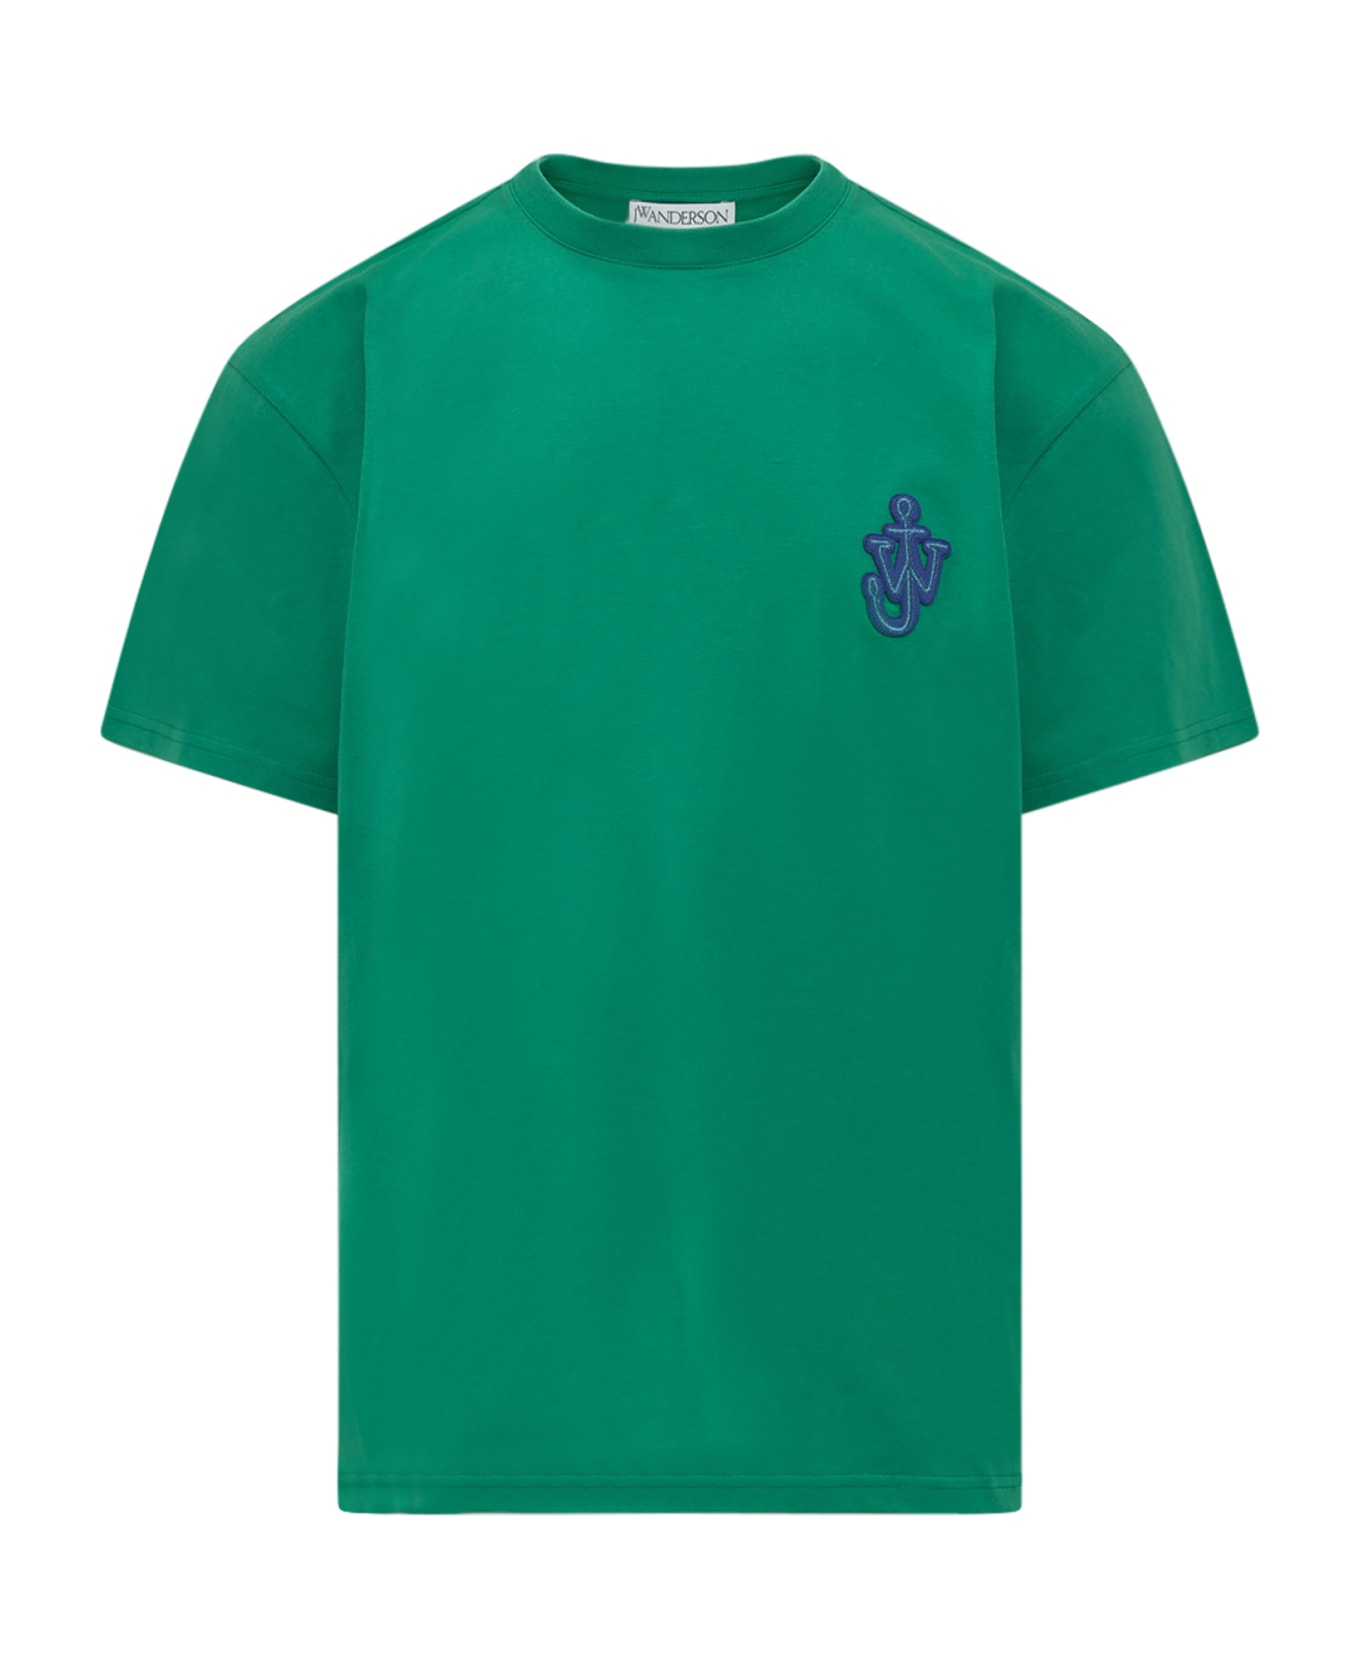 J.W. Anderson Anchor T-shirt - Racing green シャツ